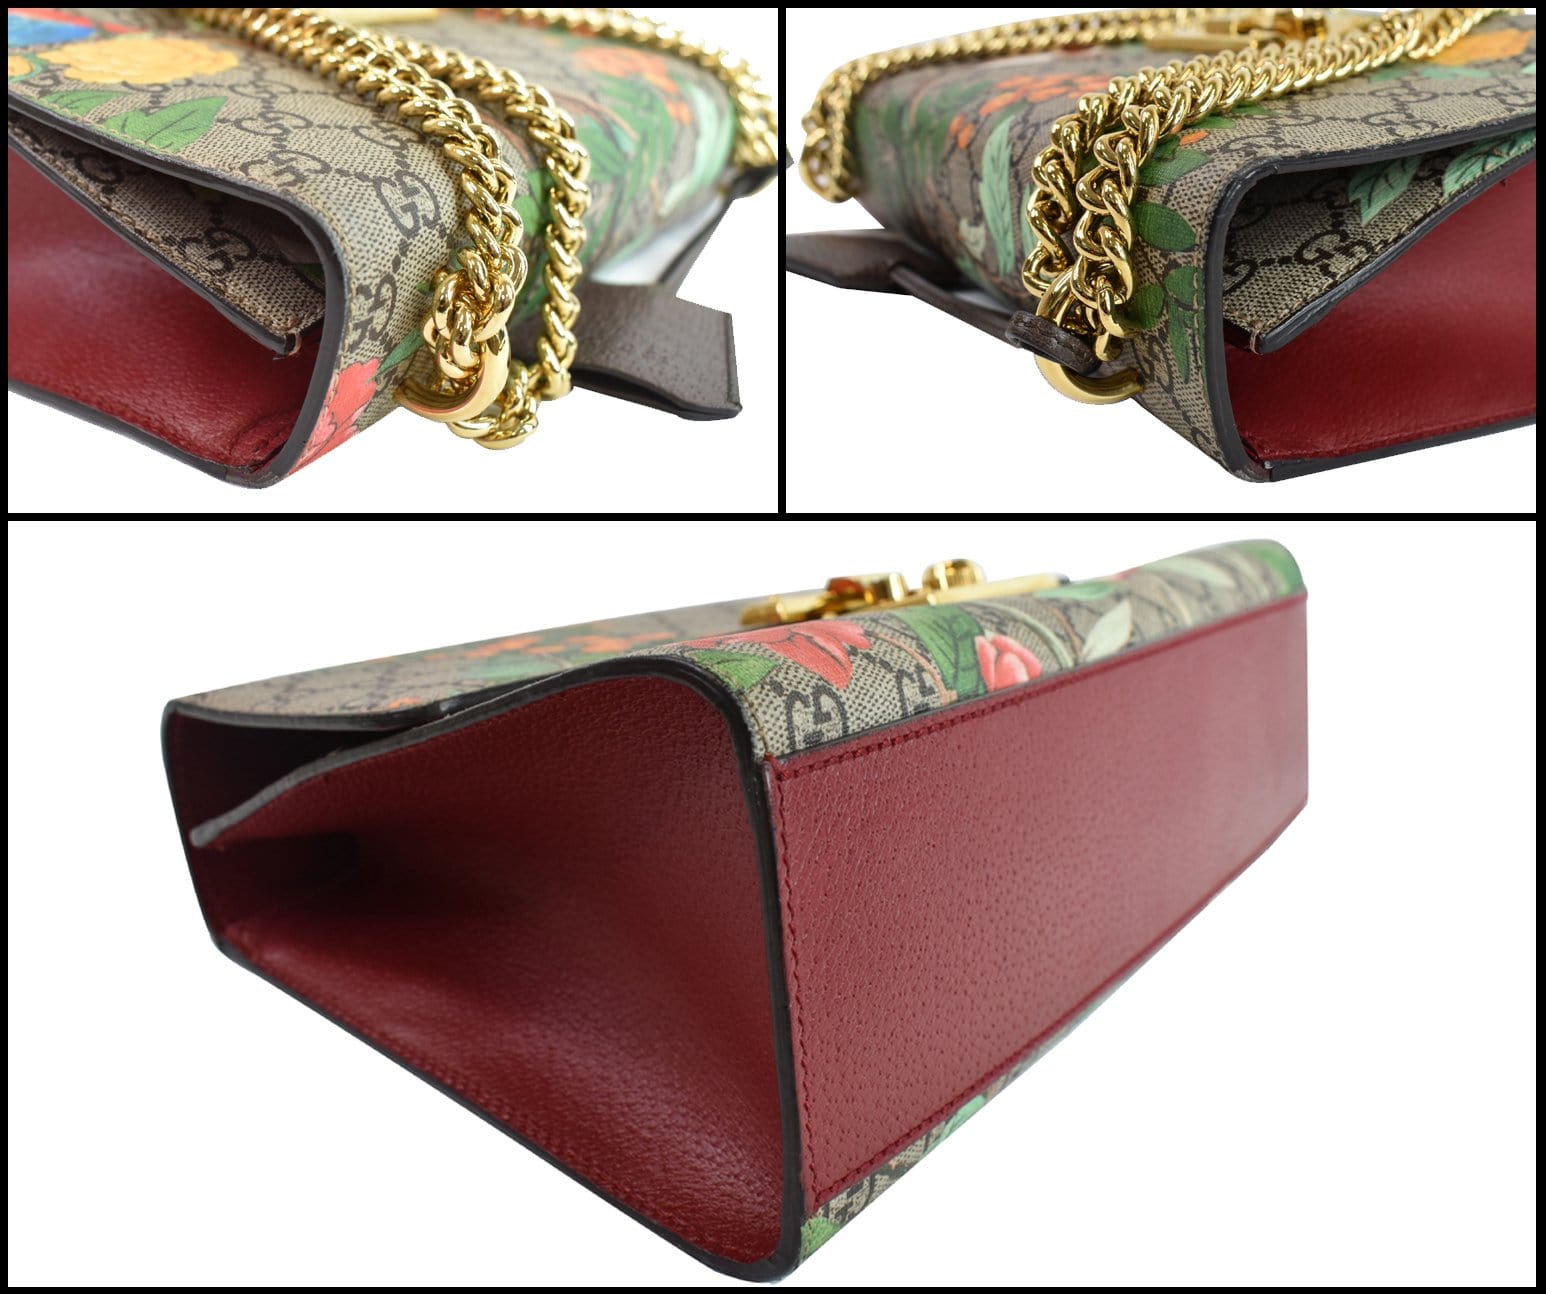 Gucci Beige/Red GG Supreme Small Padlock Shoulder Bag Gucci